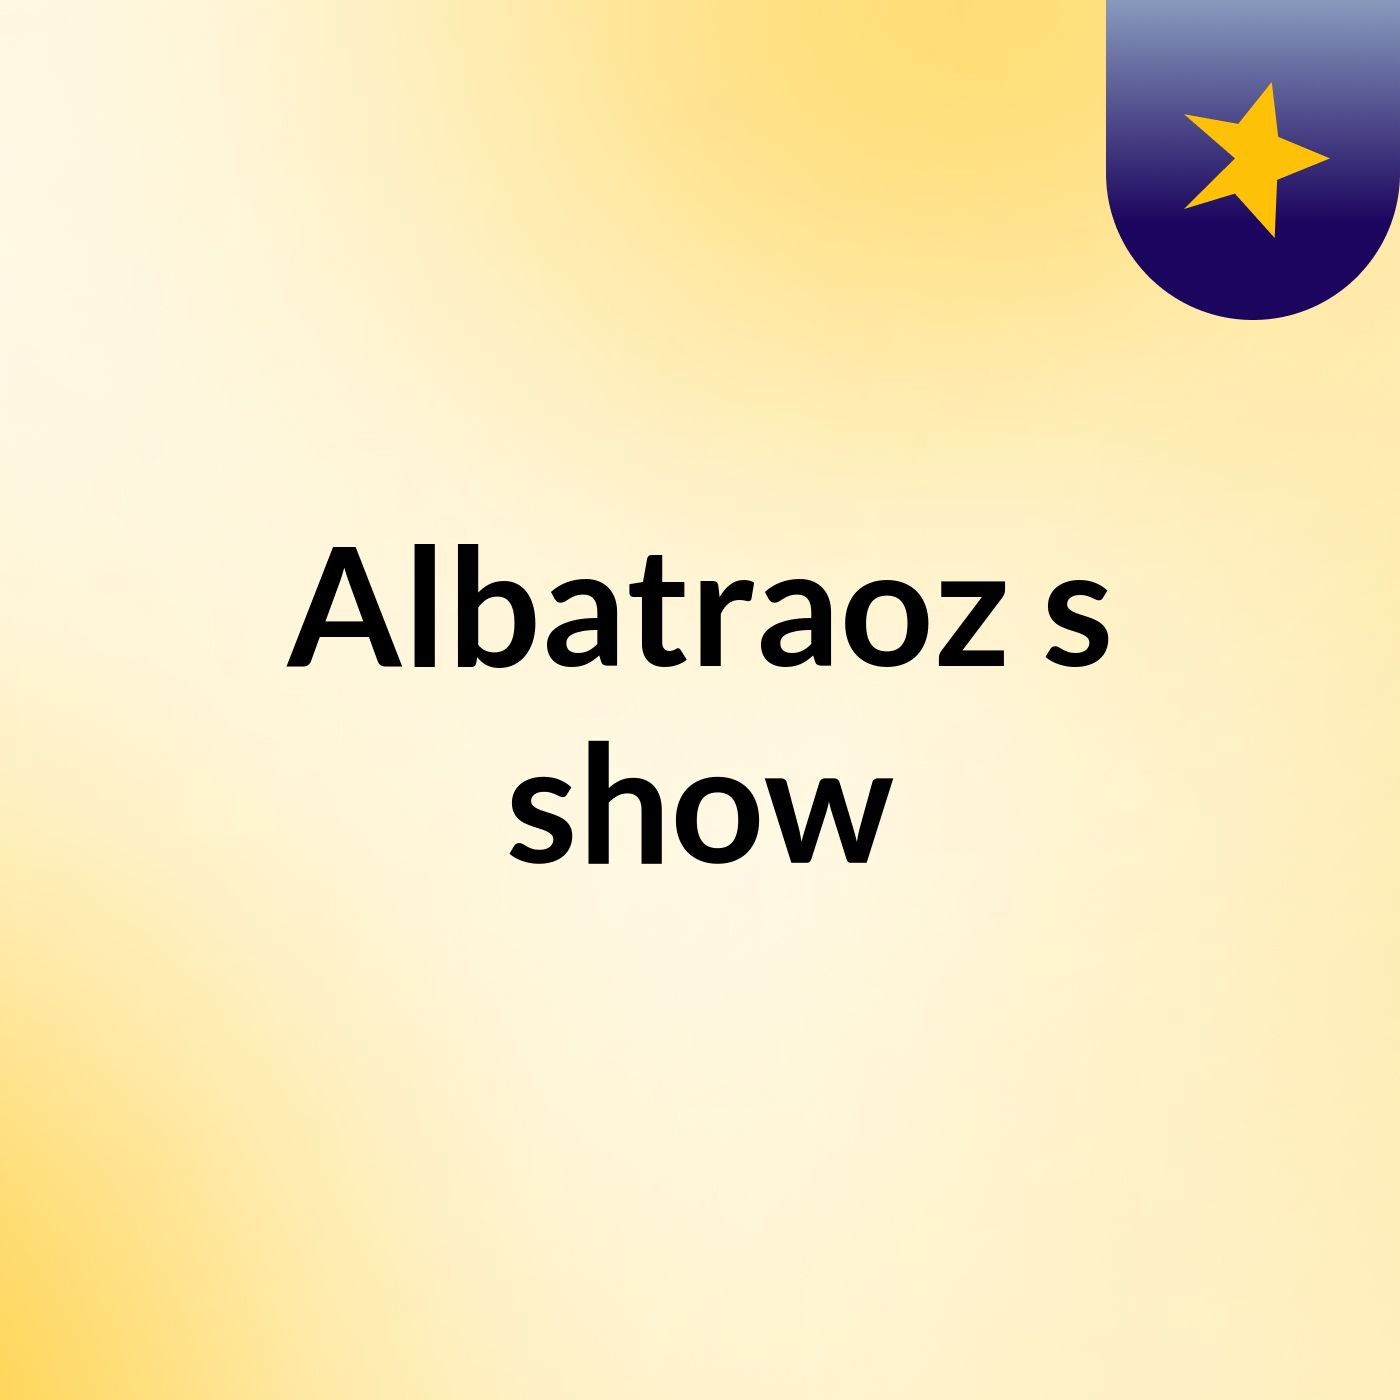 Albatraoz's show